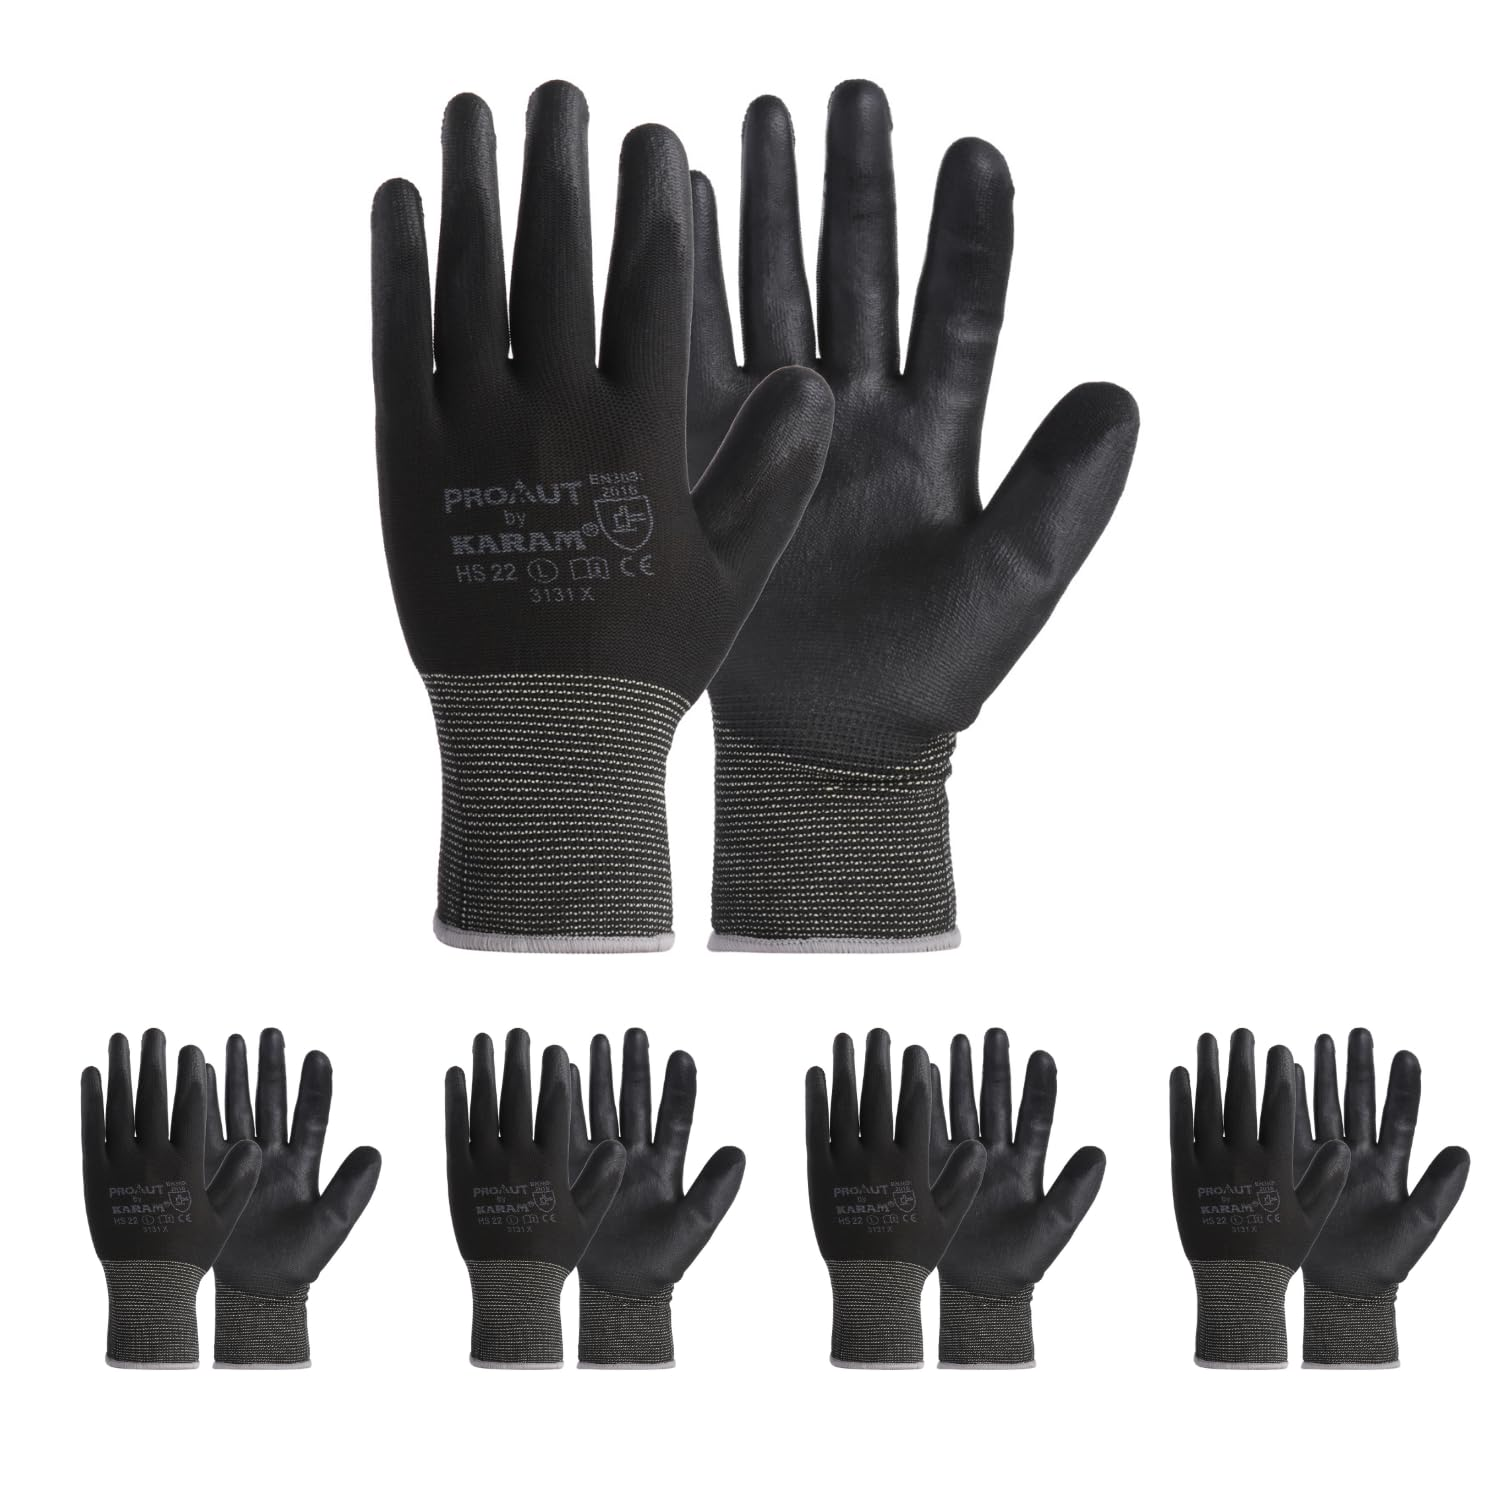 Karam Safety gloves HS 22 4